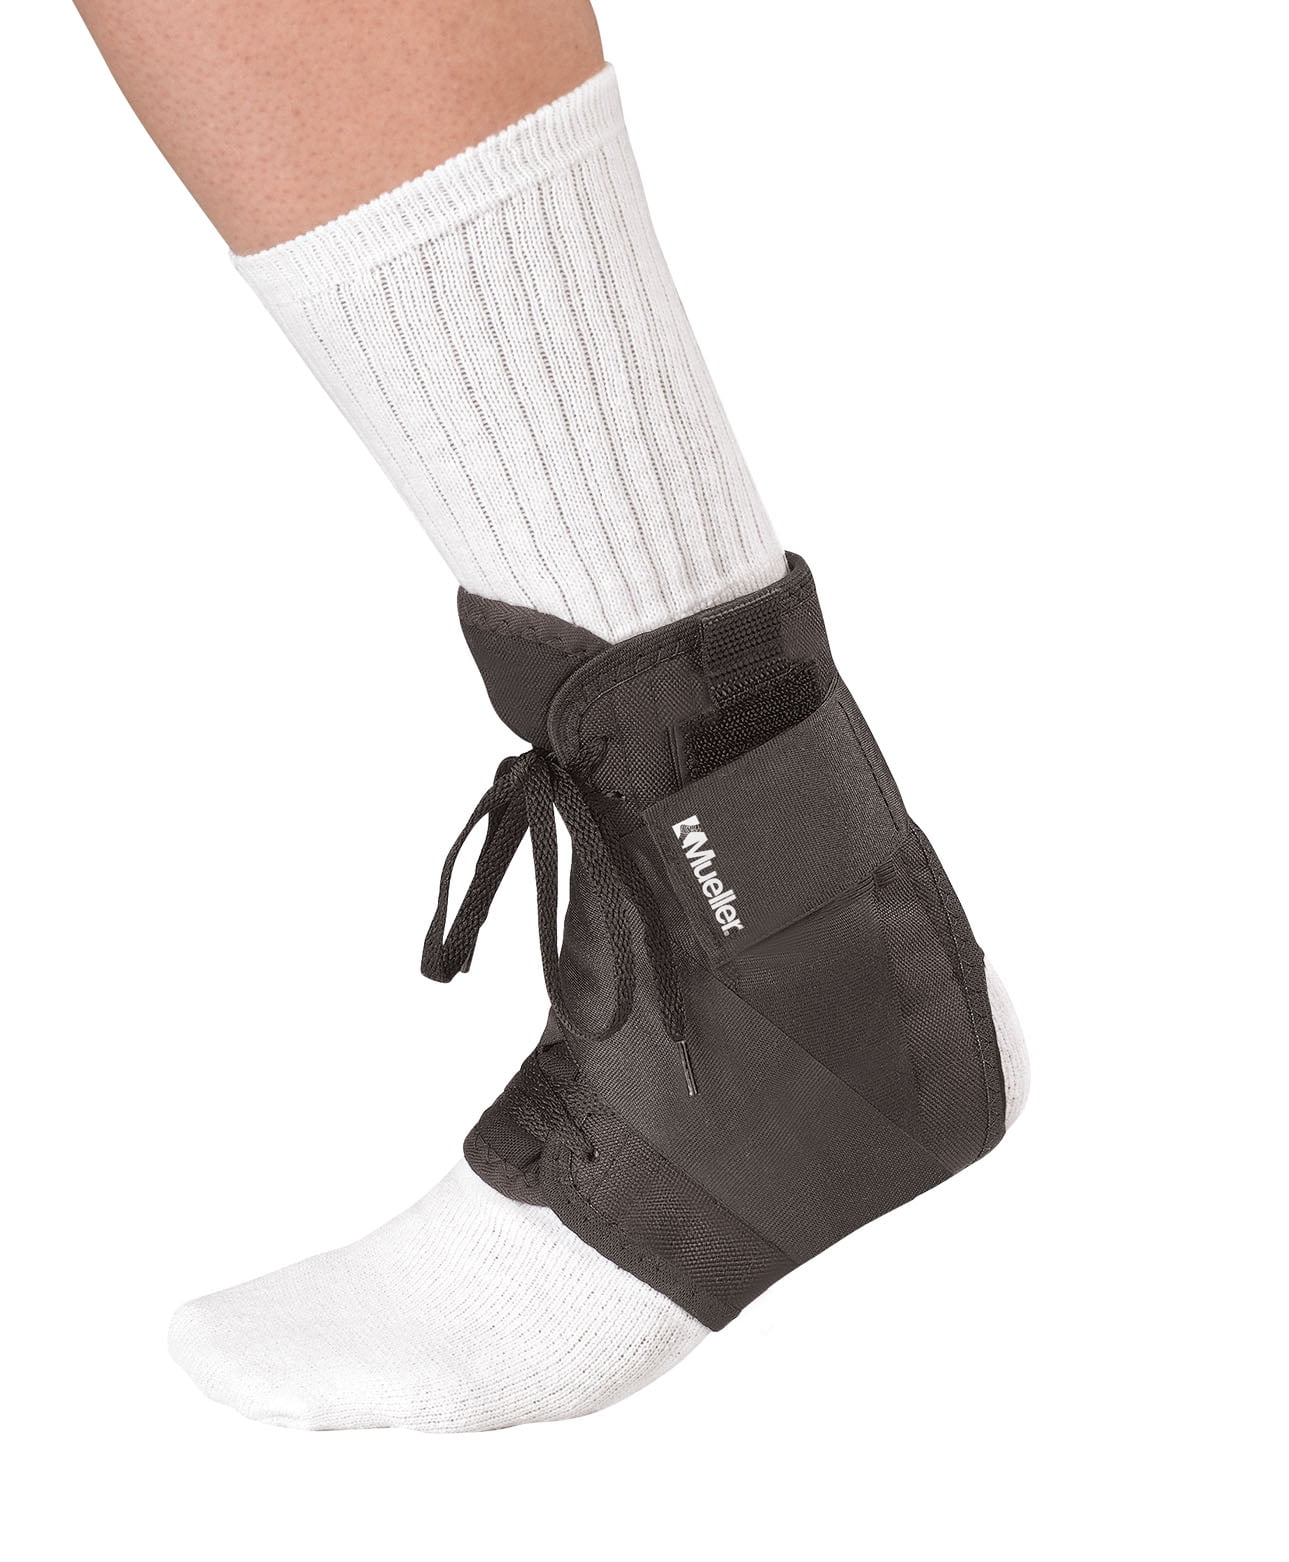 Black Active Ankle AS1 Pro Lace-Up Brace Medium 